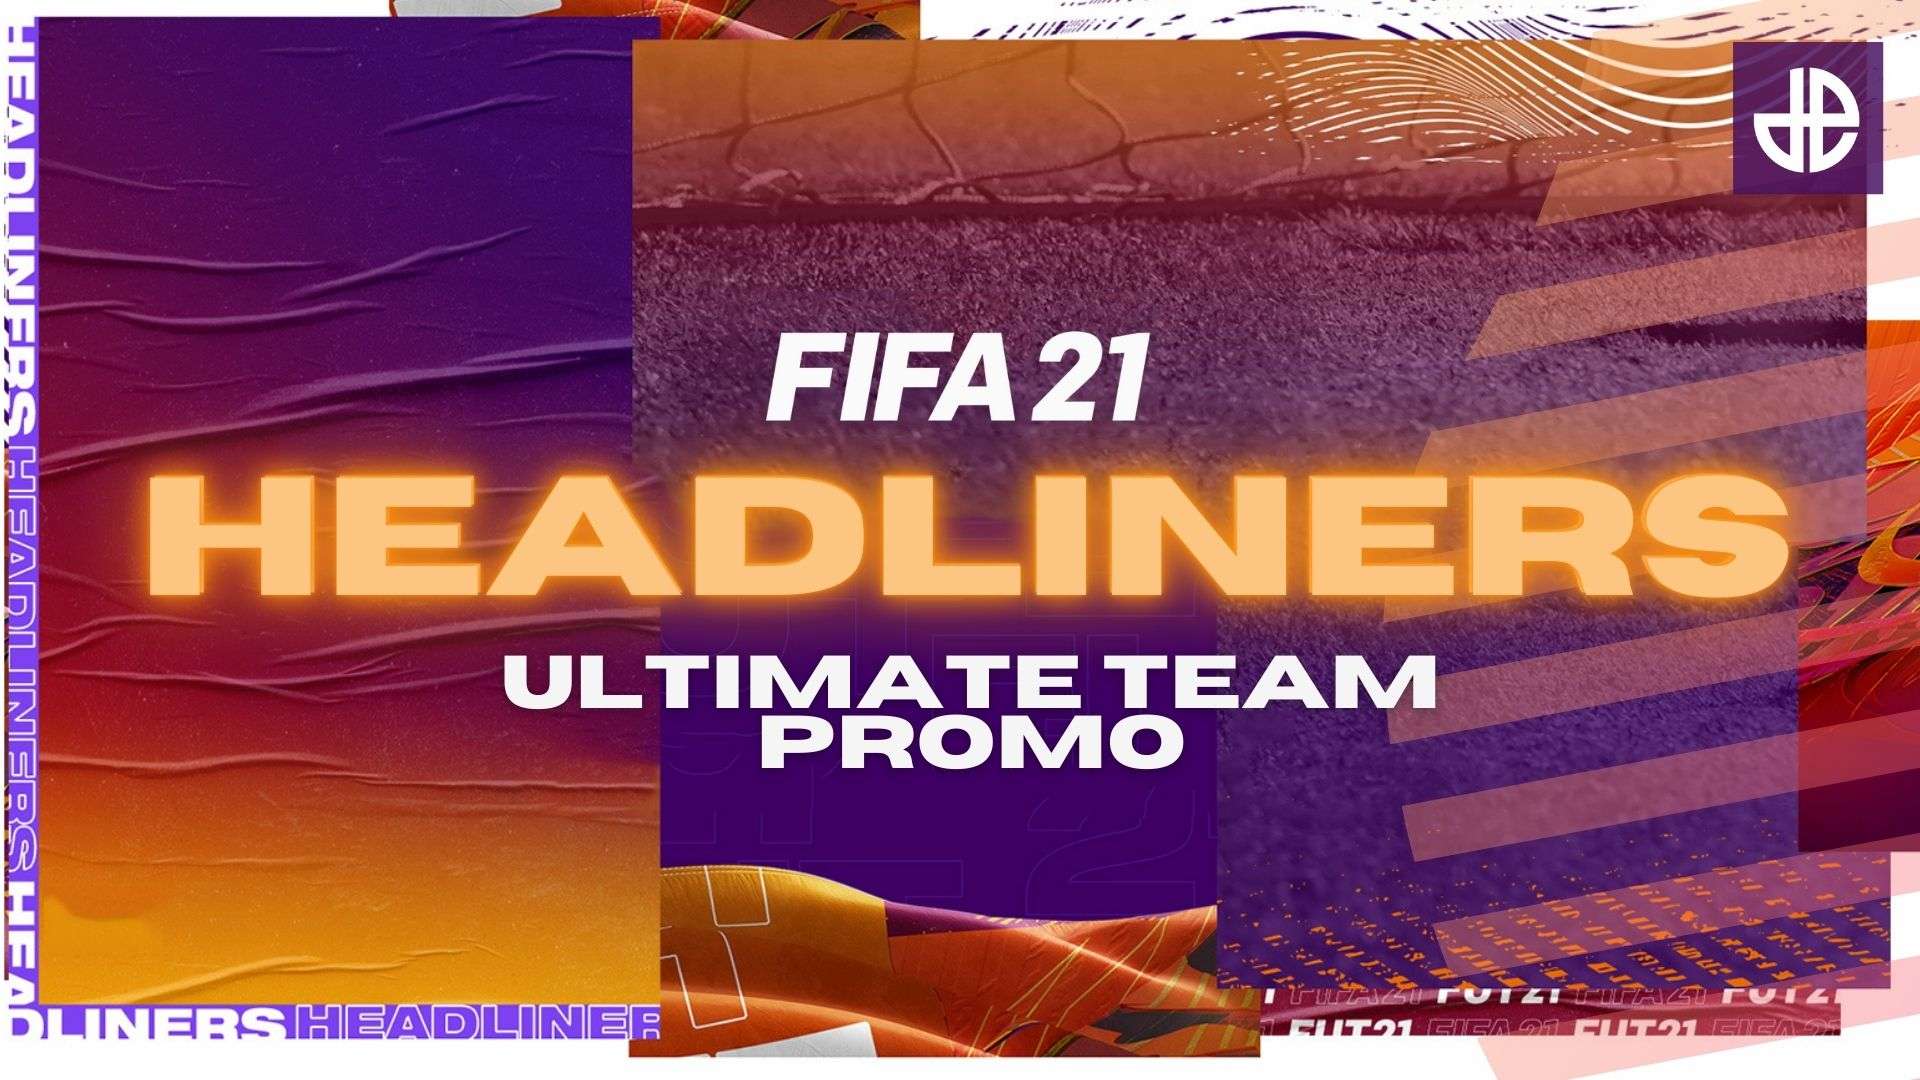 FIFA 21 Ultimate Team Headliners promo countdown.